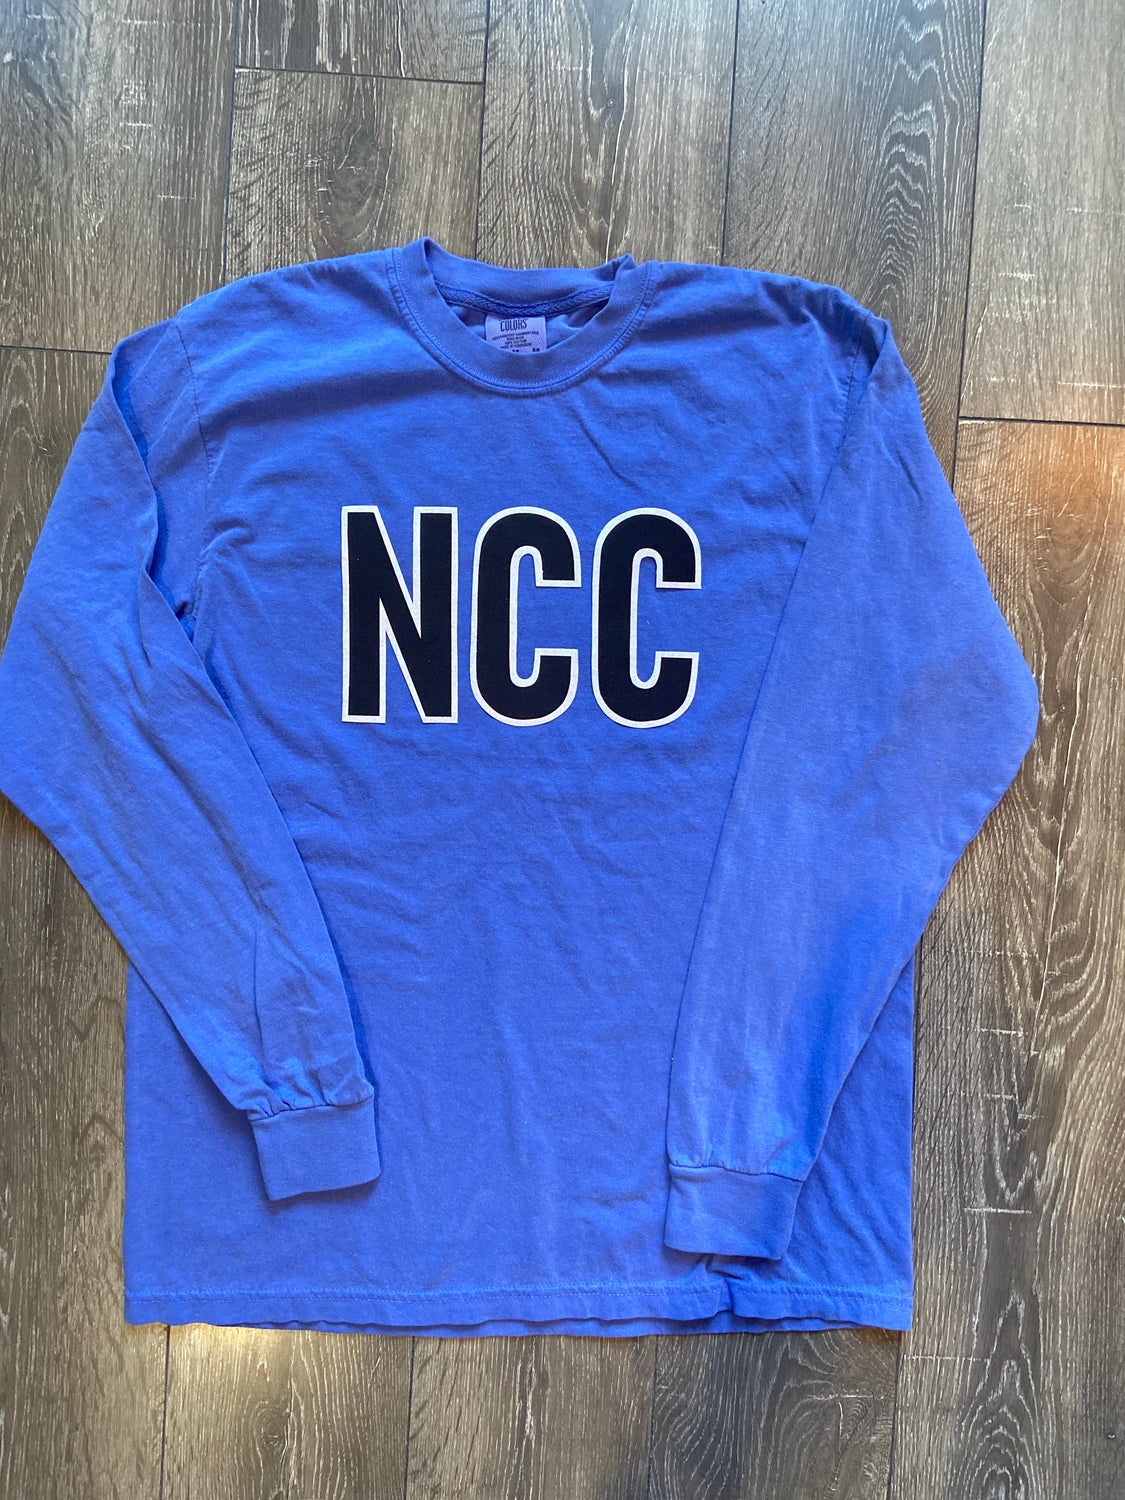 NCC - COMFORT COLORS LONG SLEEVE TEE